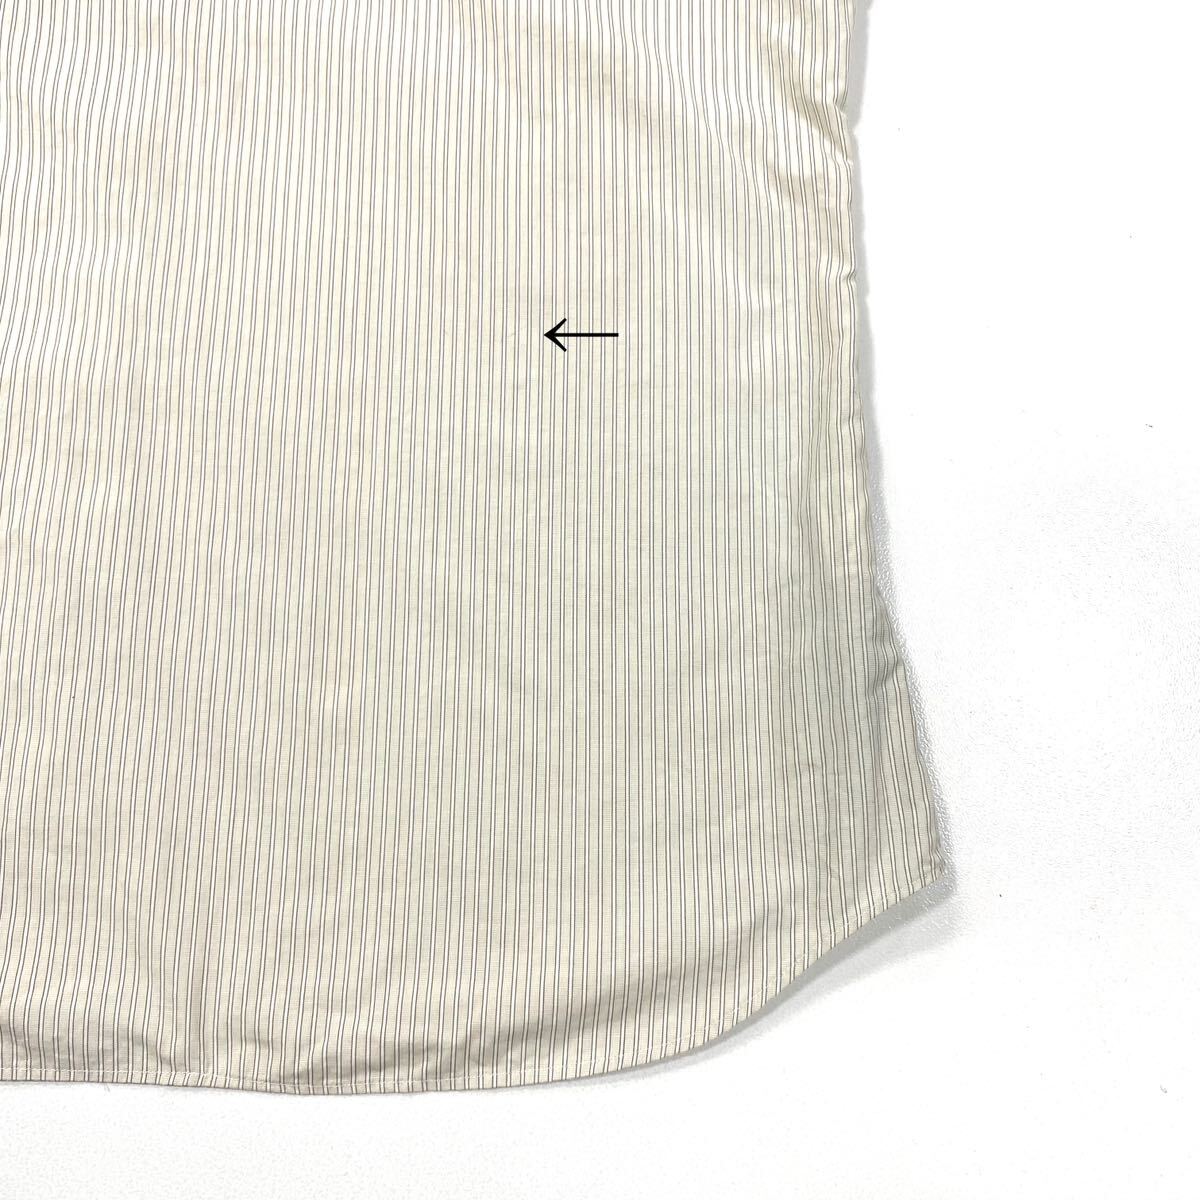 Burberry/ Burberry London stripe pattern short sleeves BD shirt men's M beige group embroidery Nitro go button down shirt 